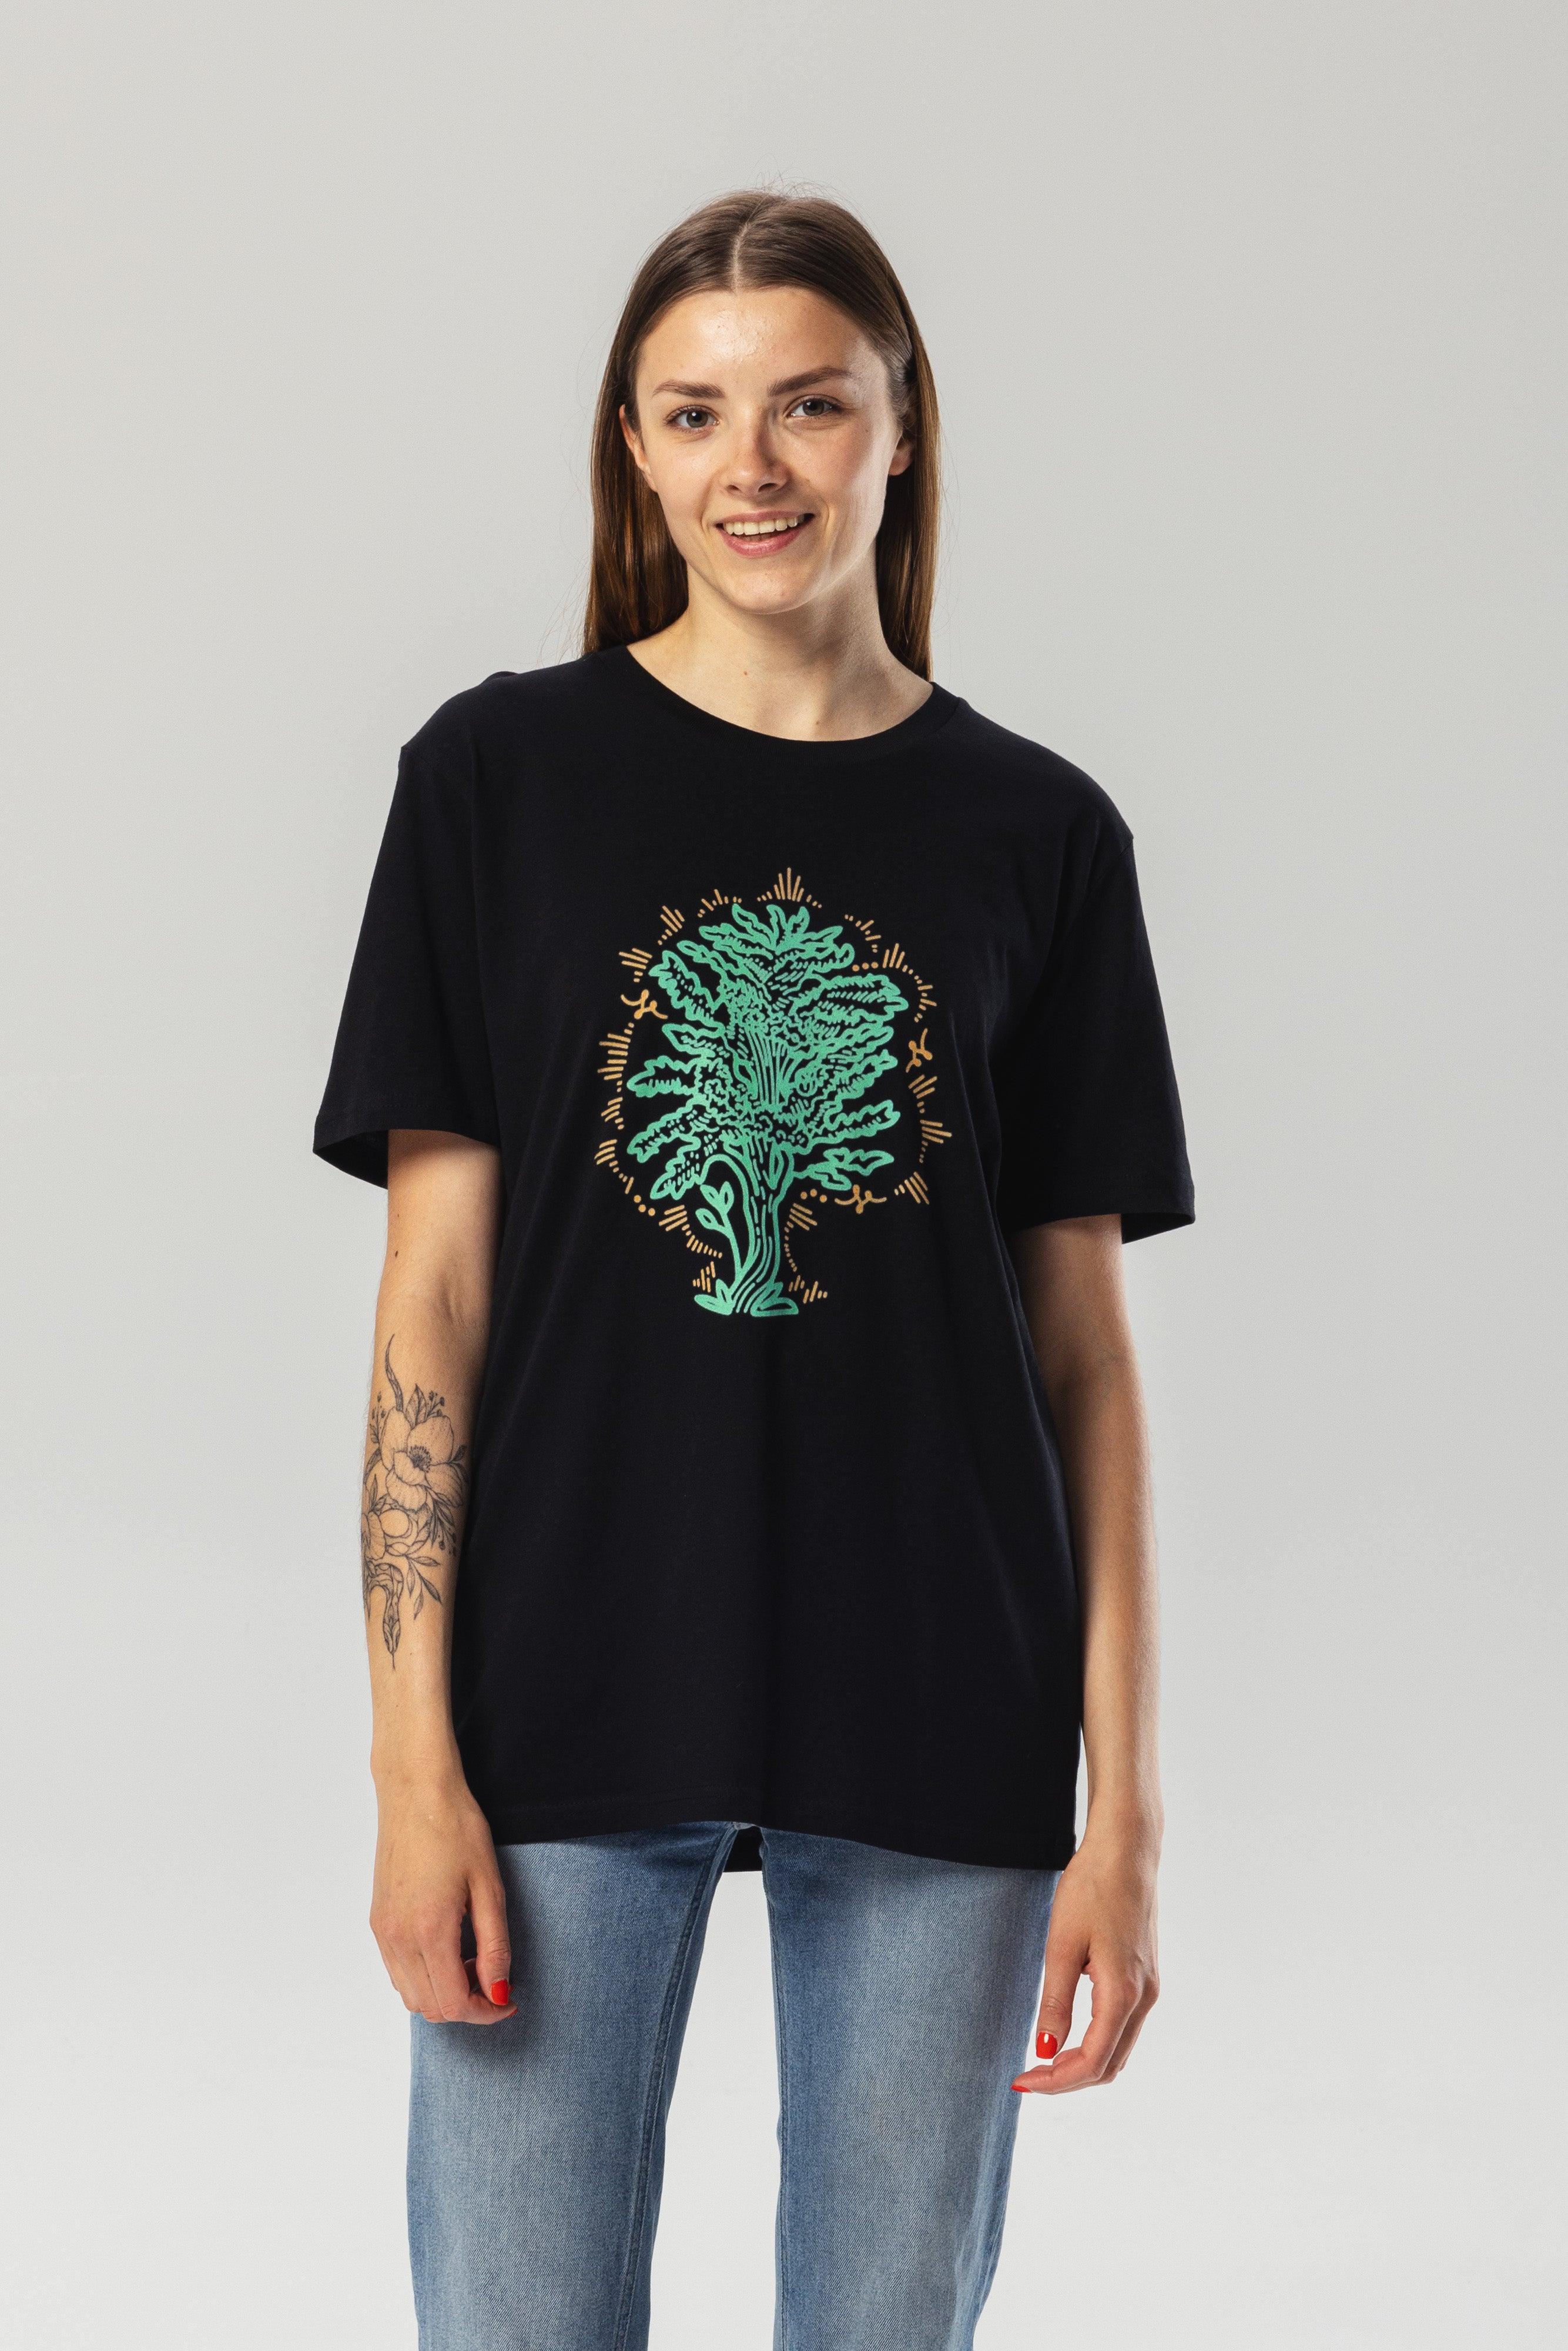 Tree of Life T-Shirt | Shirts & Tops | pitod.com